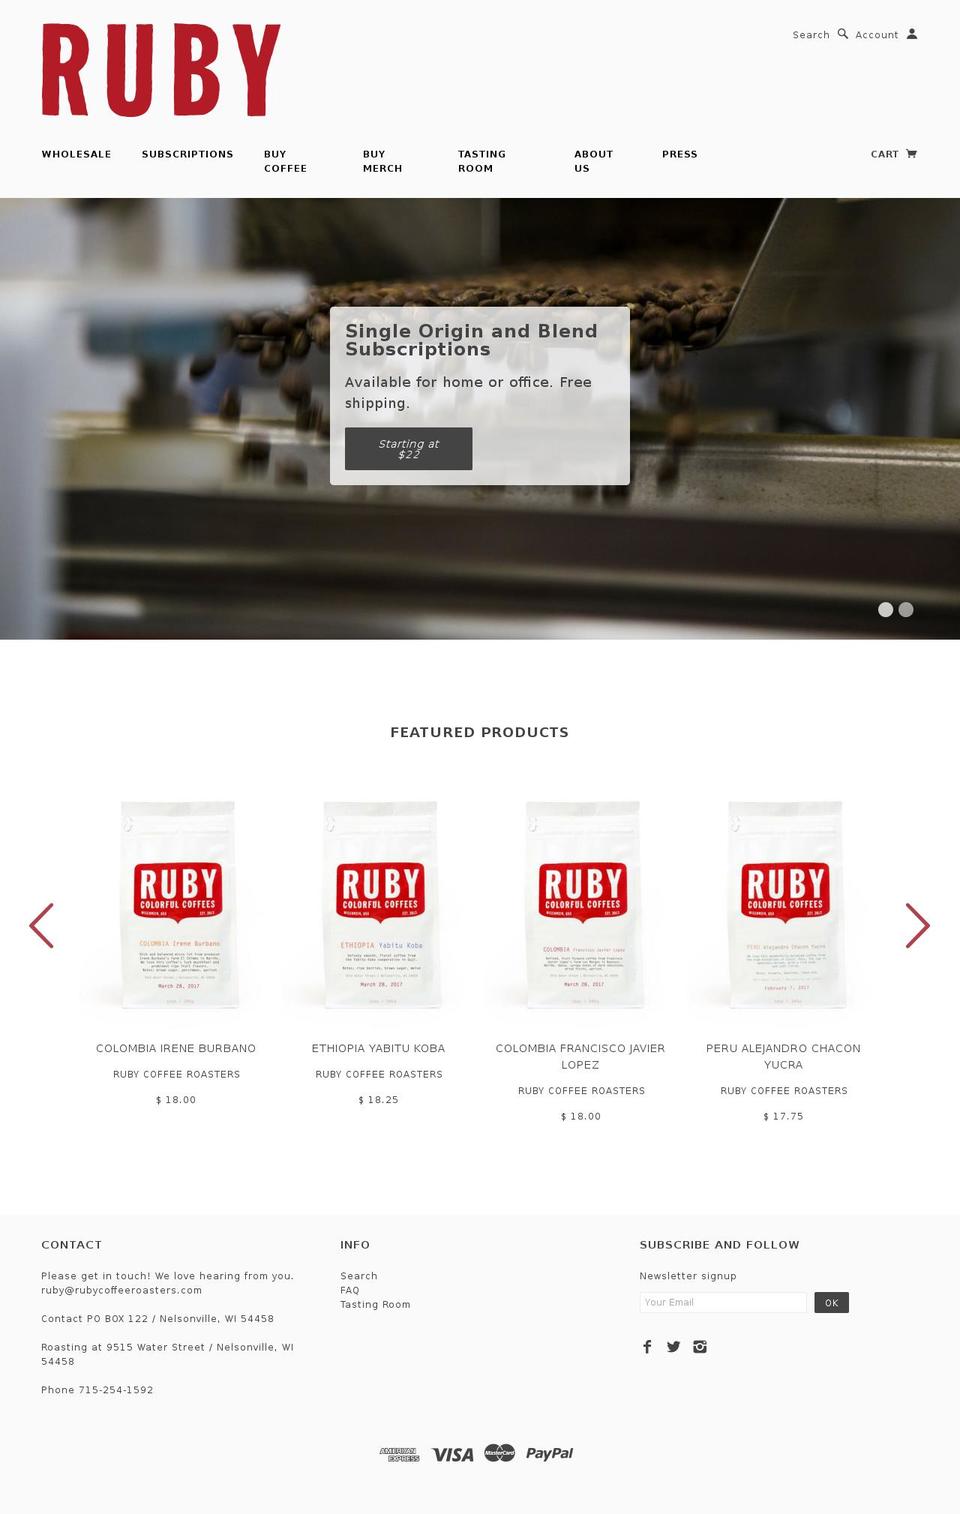 rubycoffeeroasters.com shopify website screenshot